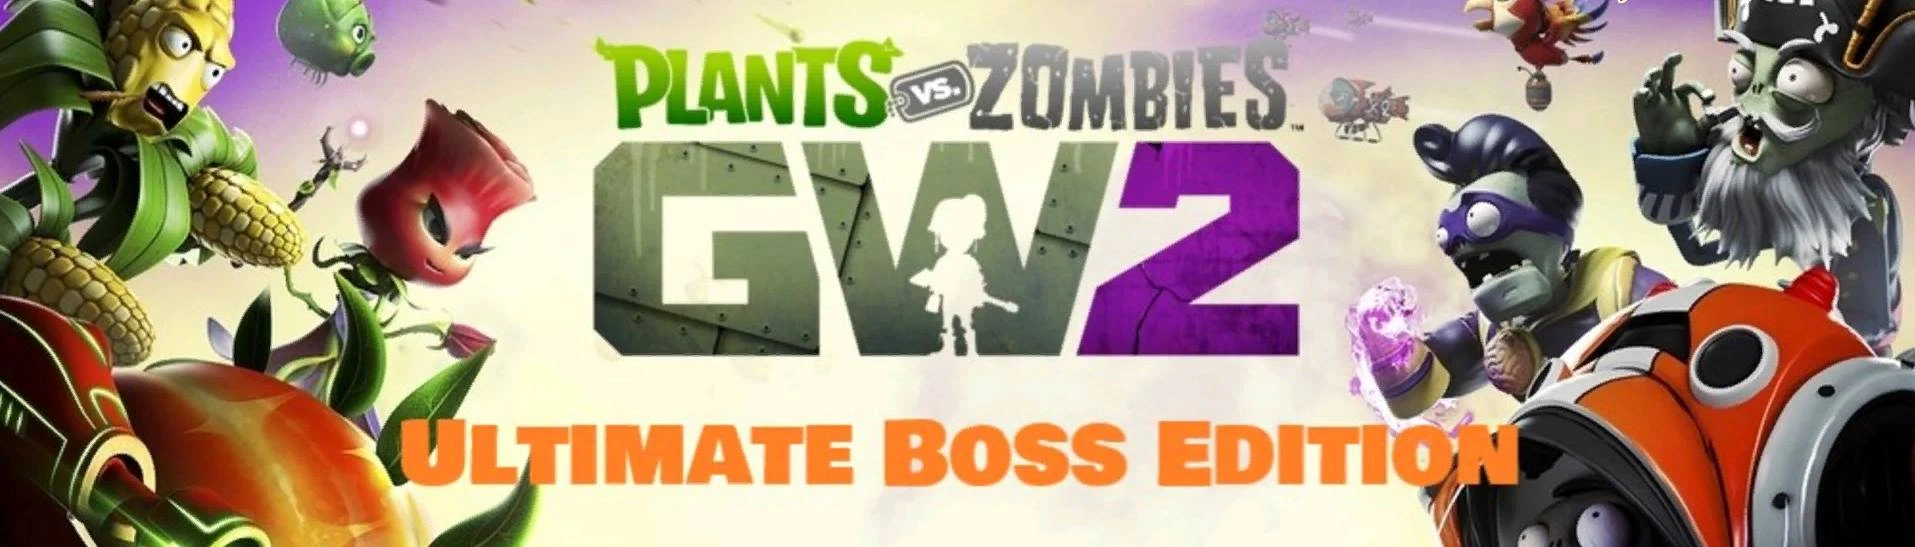 PC / Computer - Plants vs. Zombies: Garden Warfare 2 - Squash